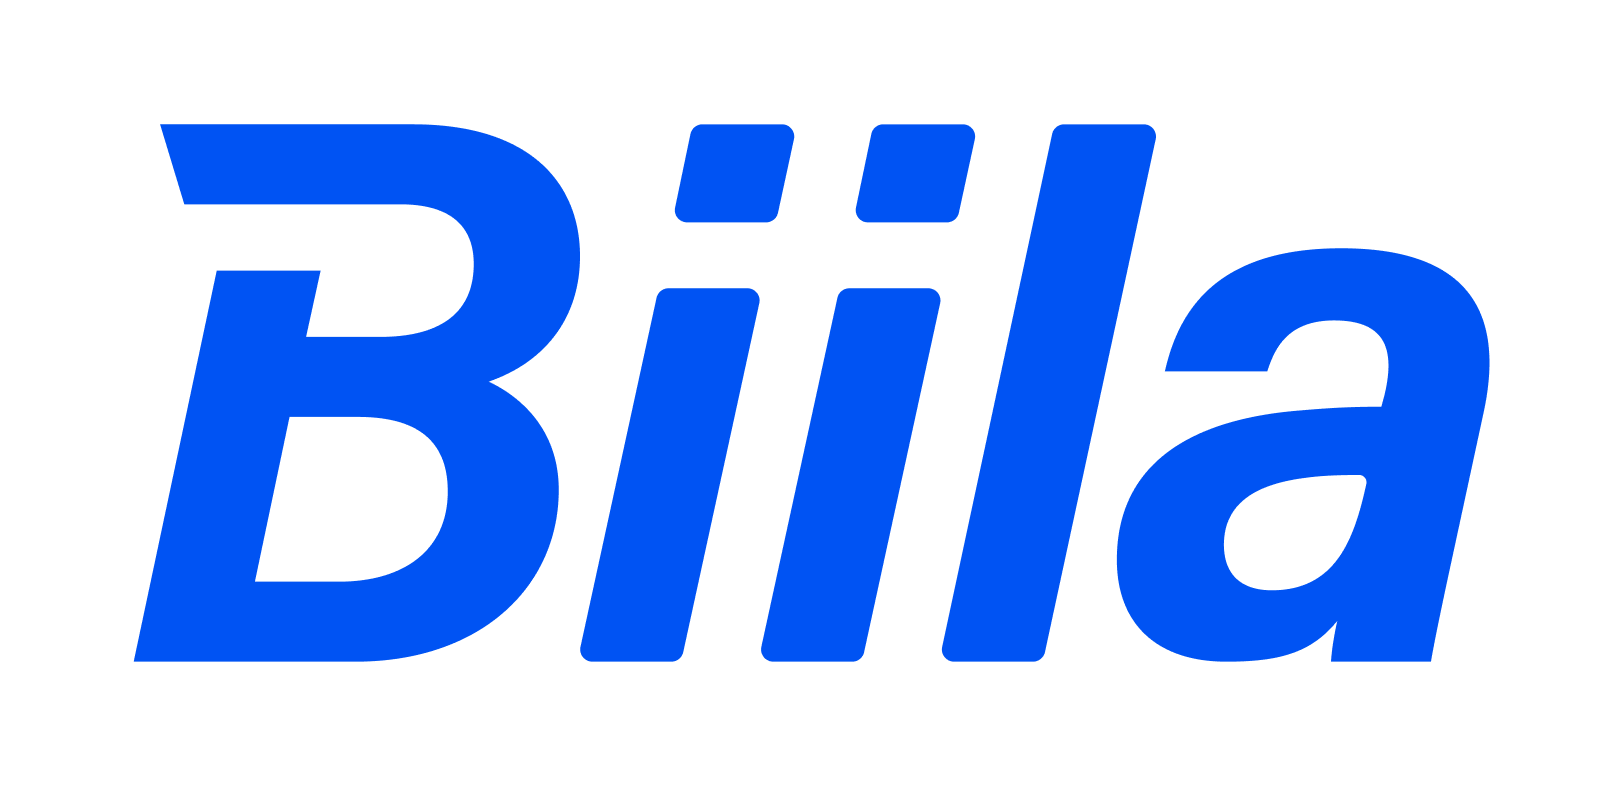 Biila logo blue